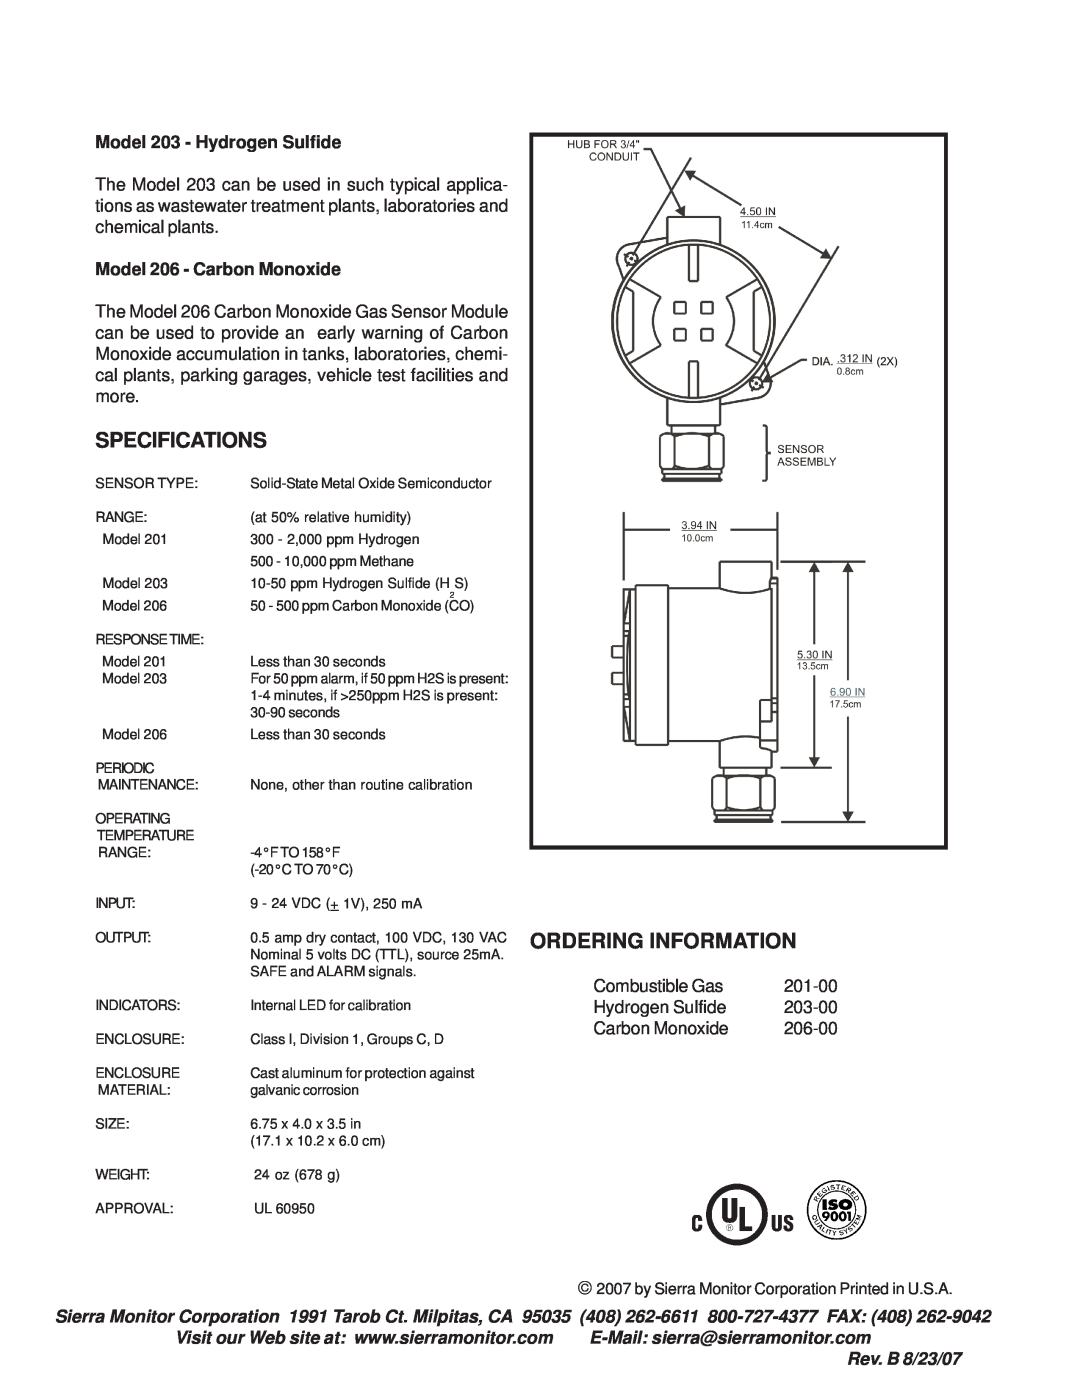 Sierra Monitor Corporation 206, 20X, 201 manual Specifications, Ordering Information, Model 203 - Hydrogen Sulfide 